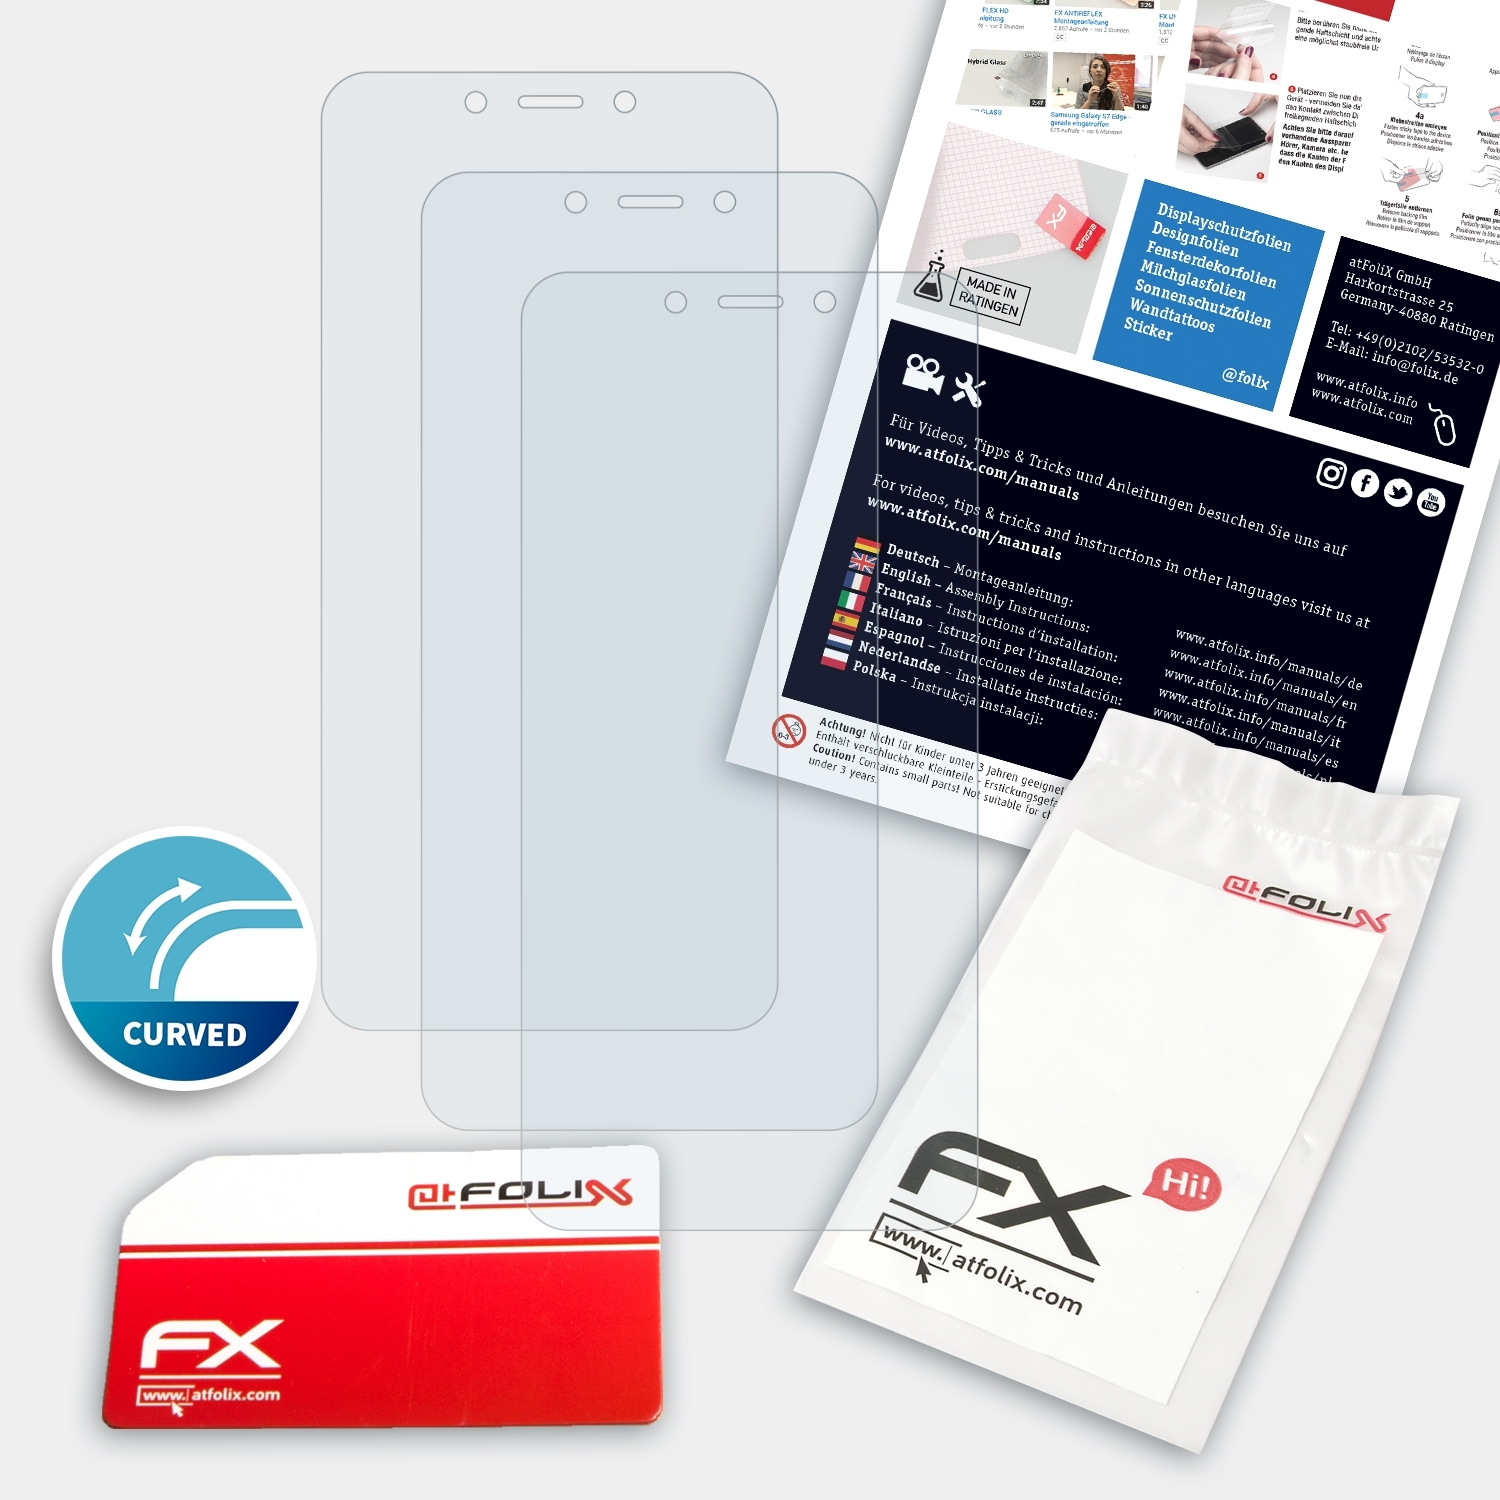 6A) ATFOLIX 3x FX-ActiFleX Displayschutz(für Redmi Xiaomi